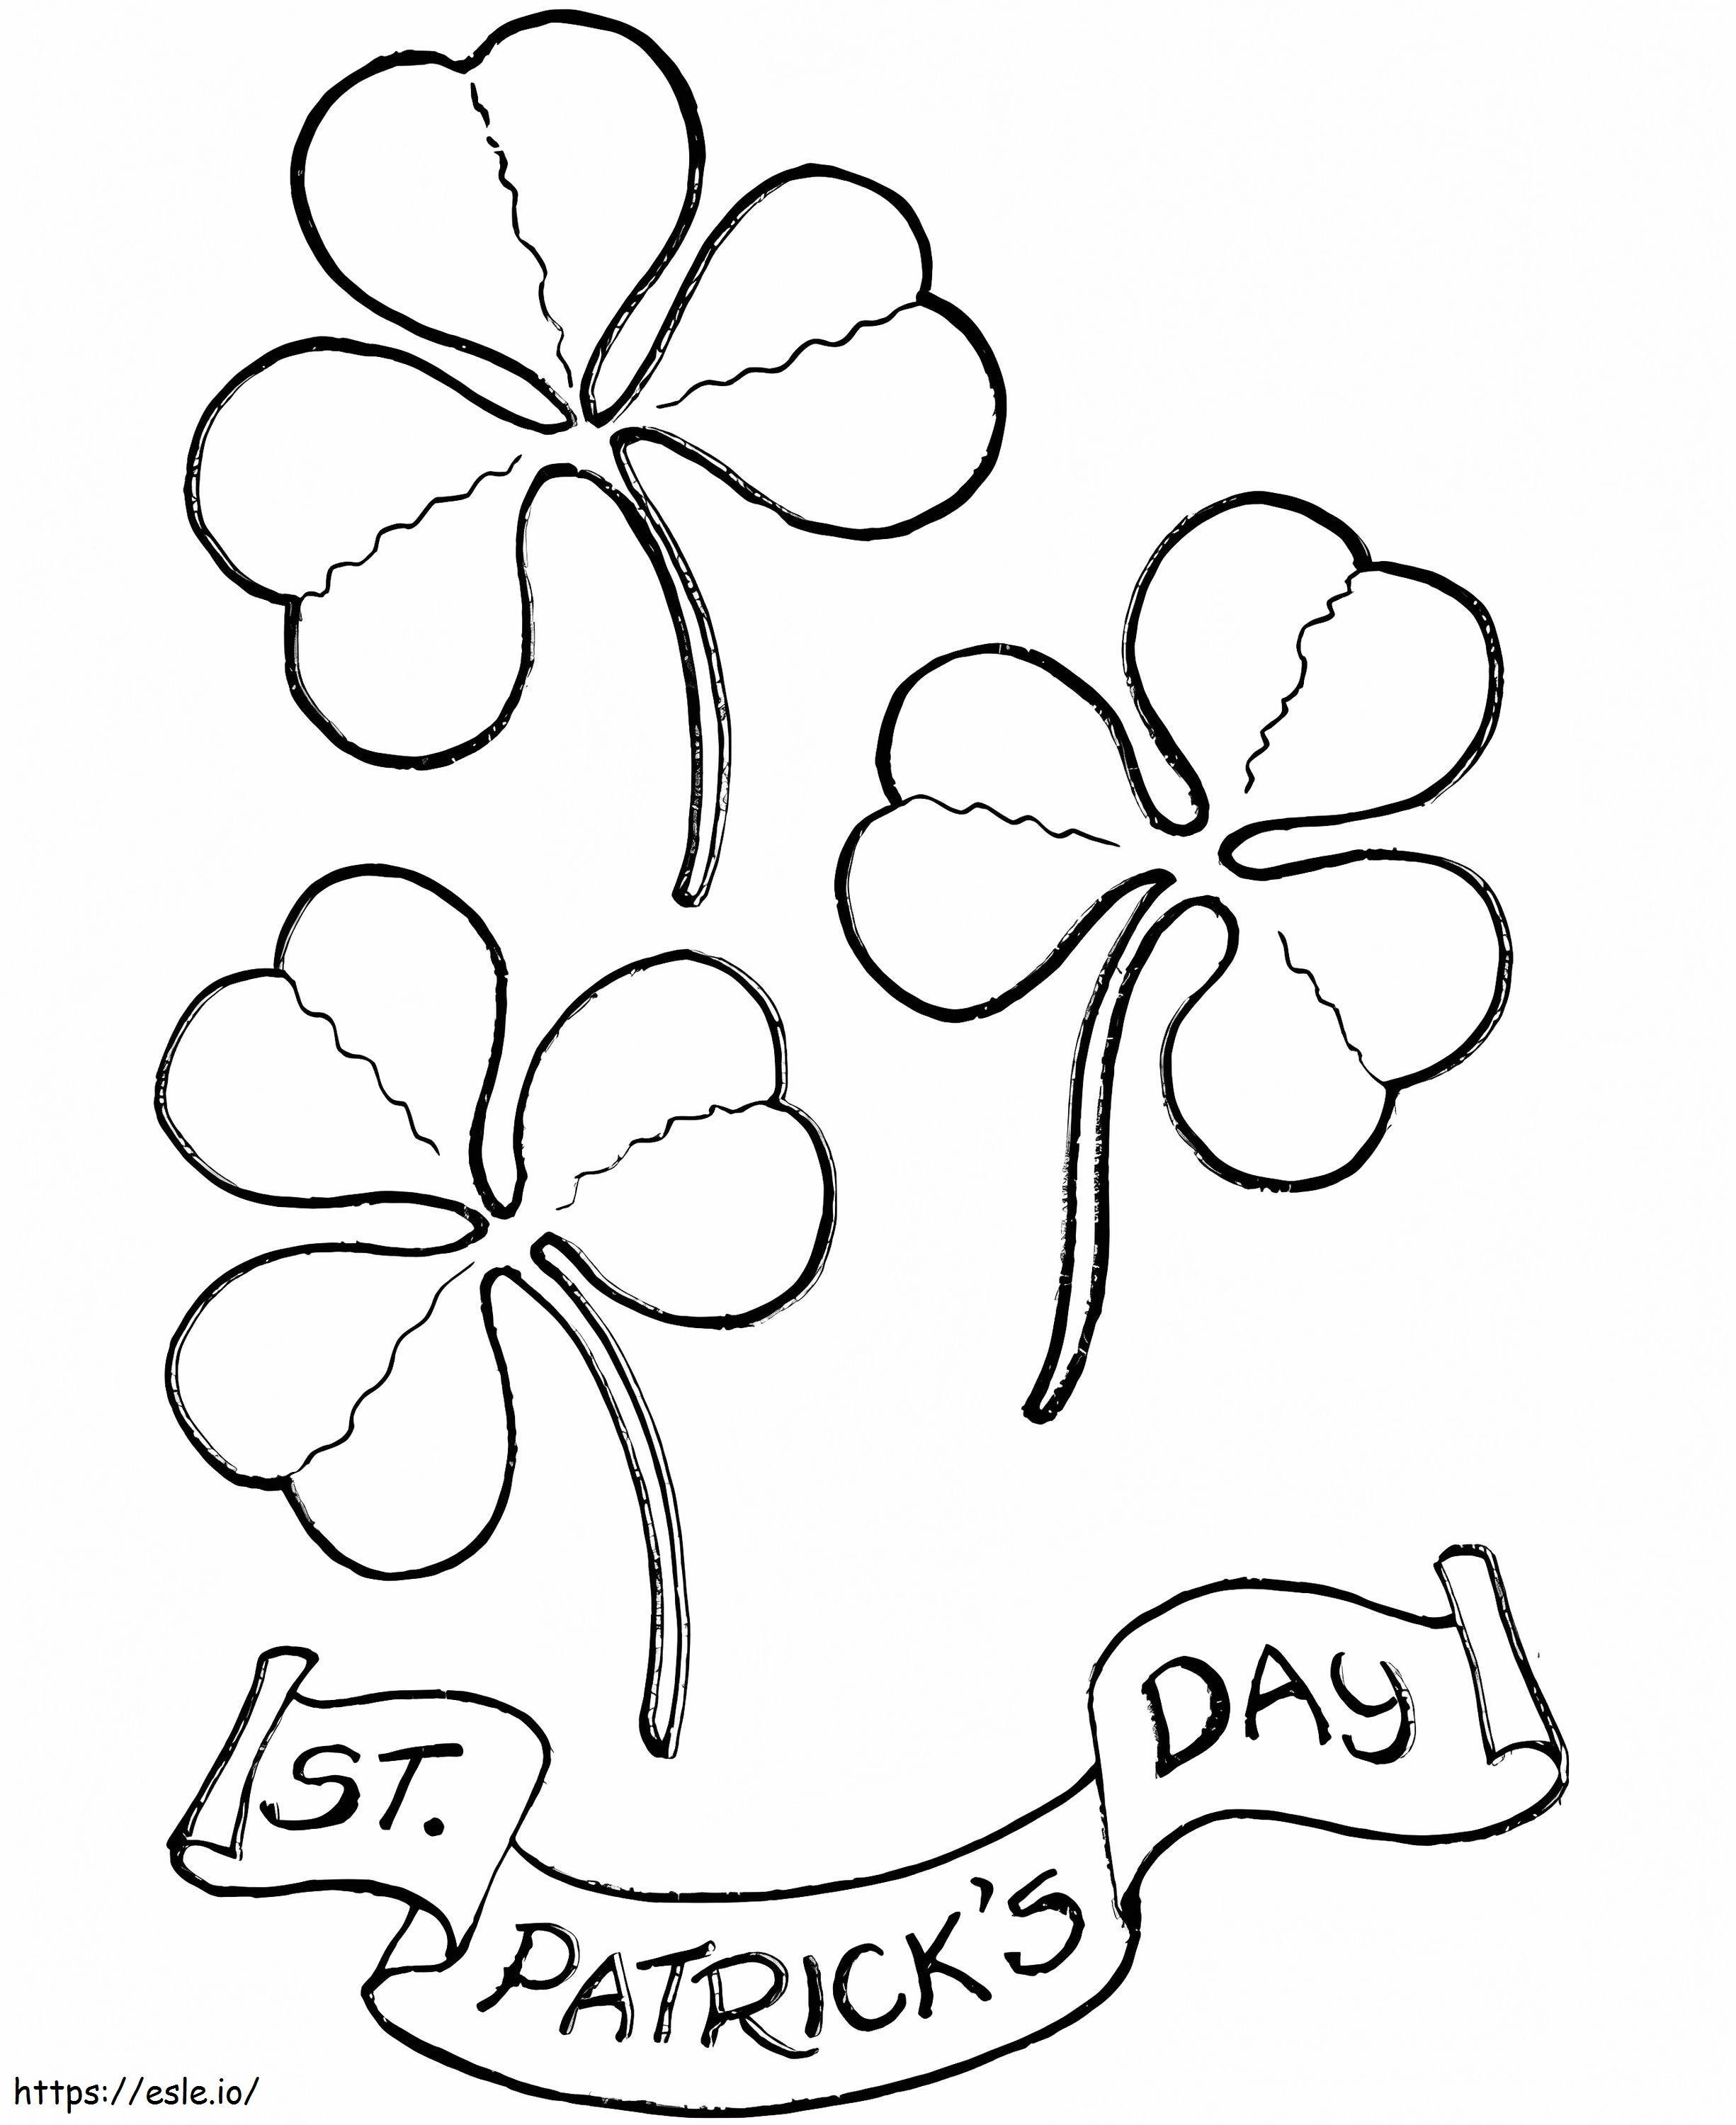 St. Patricks Day Shamrocks coloring page